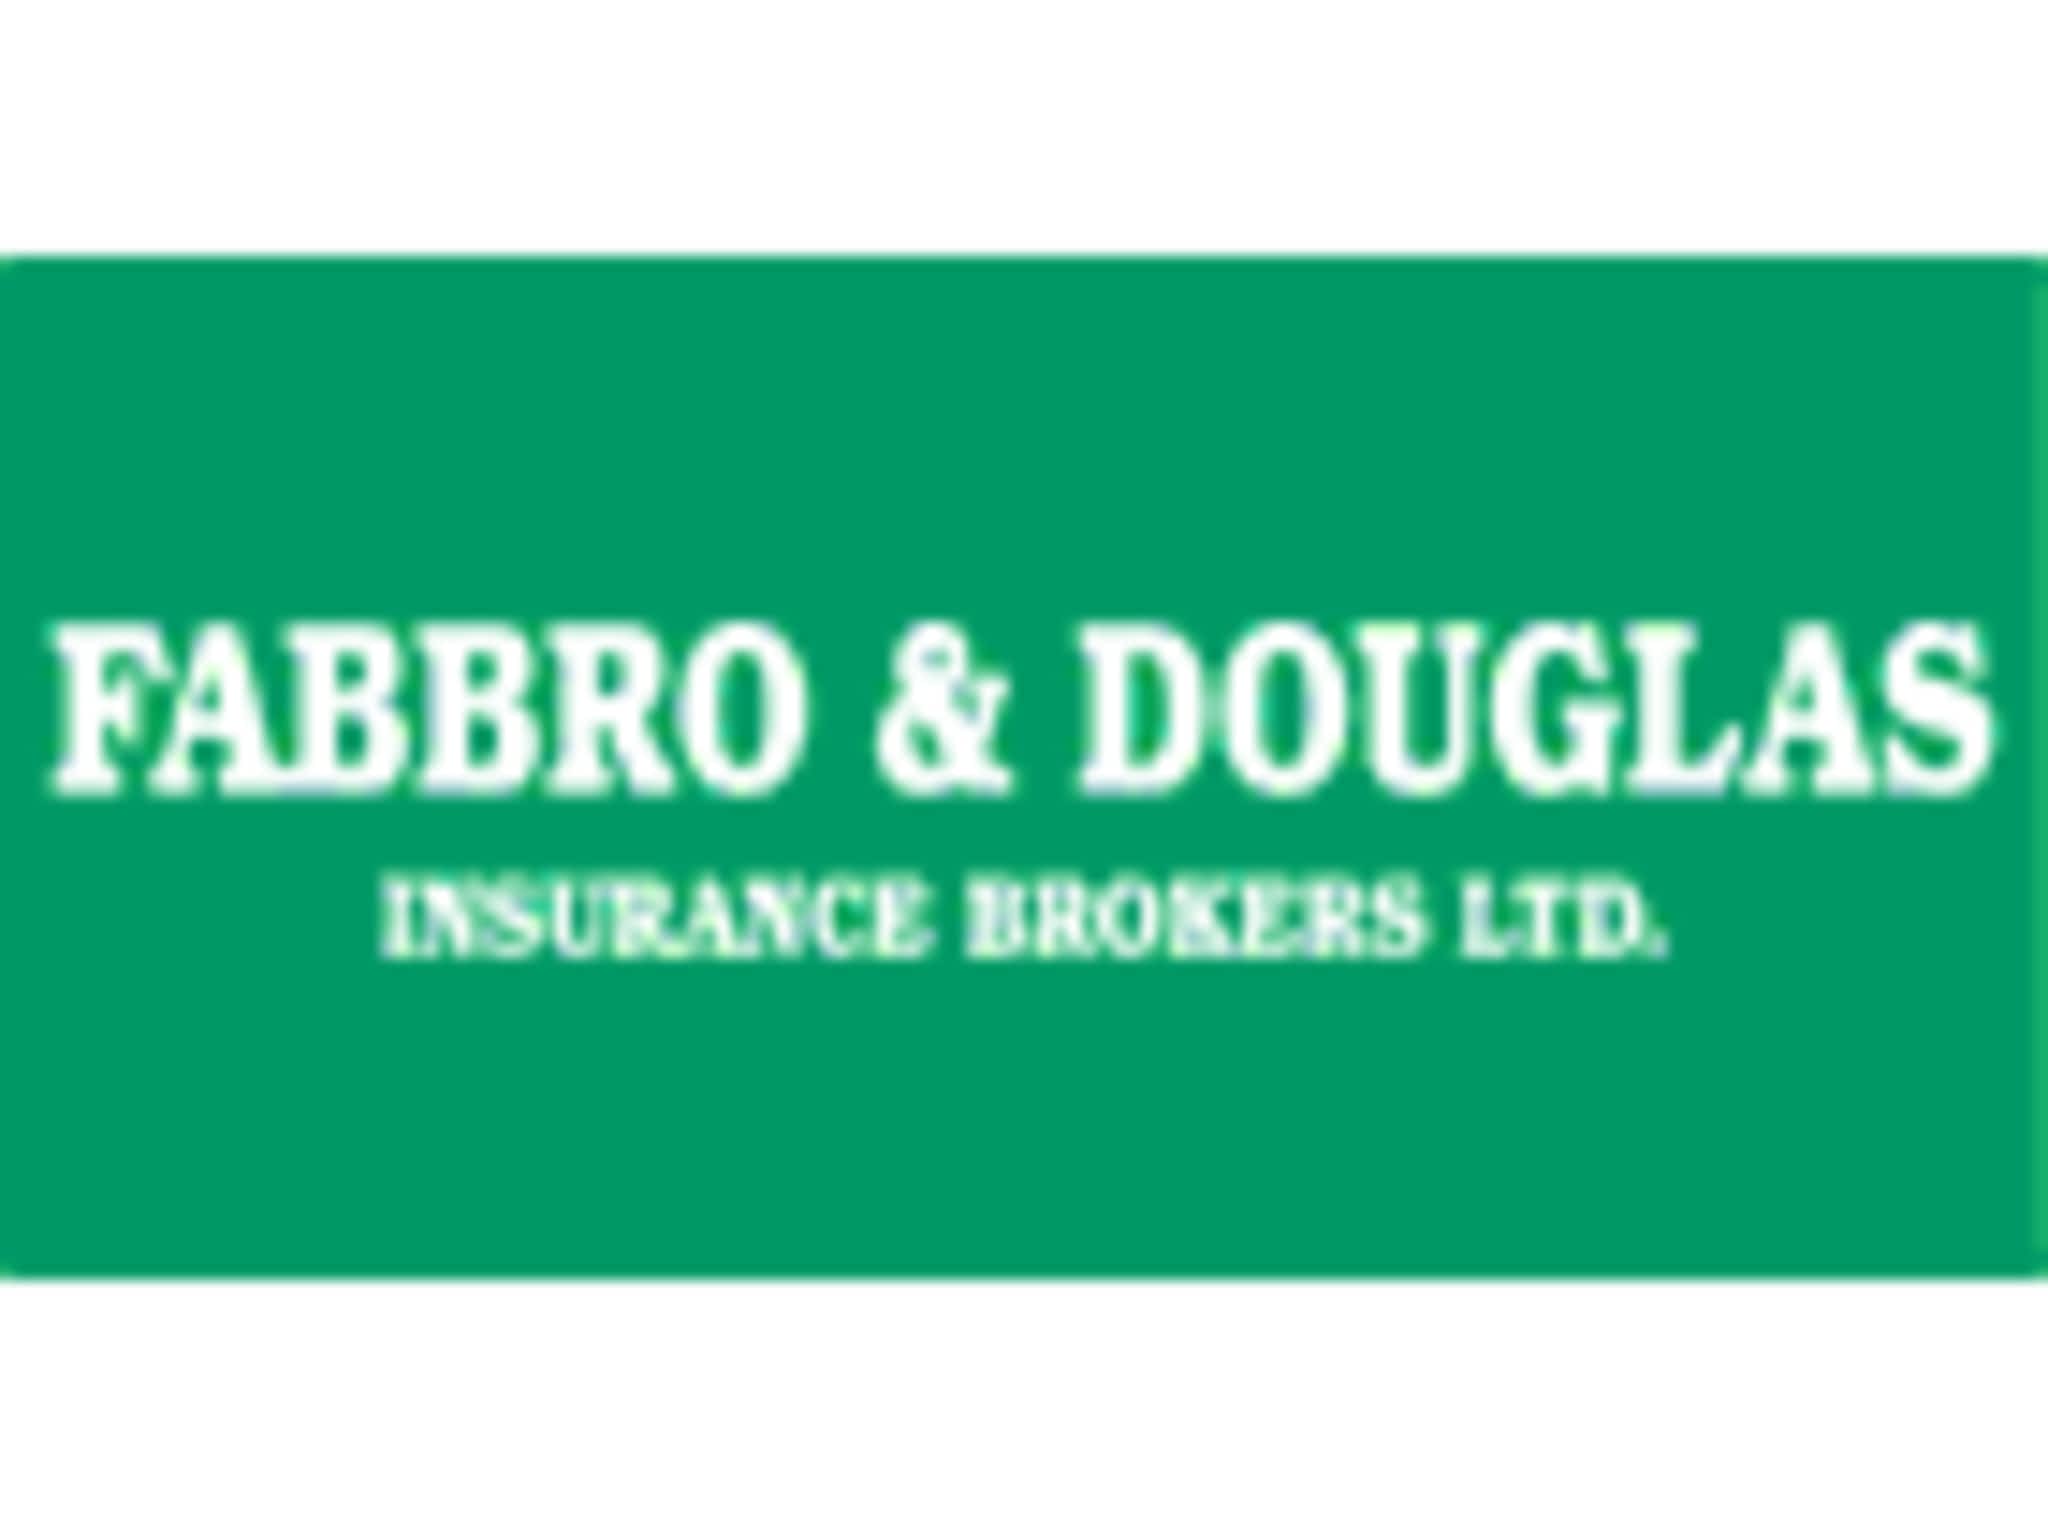 photo Fabbro & Douglas Insurance Brokers Ltd